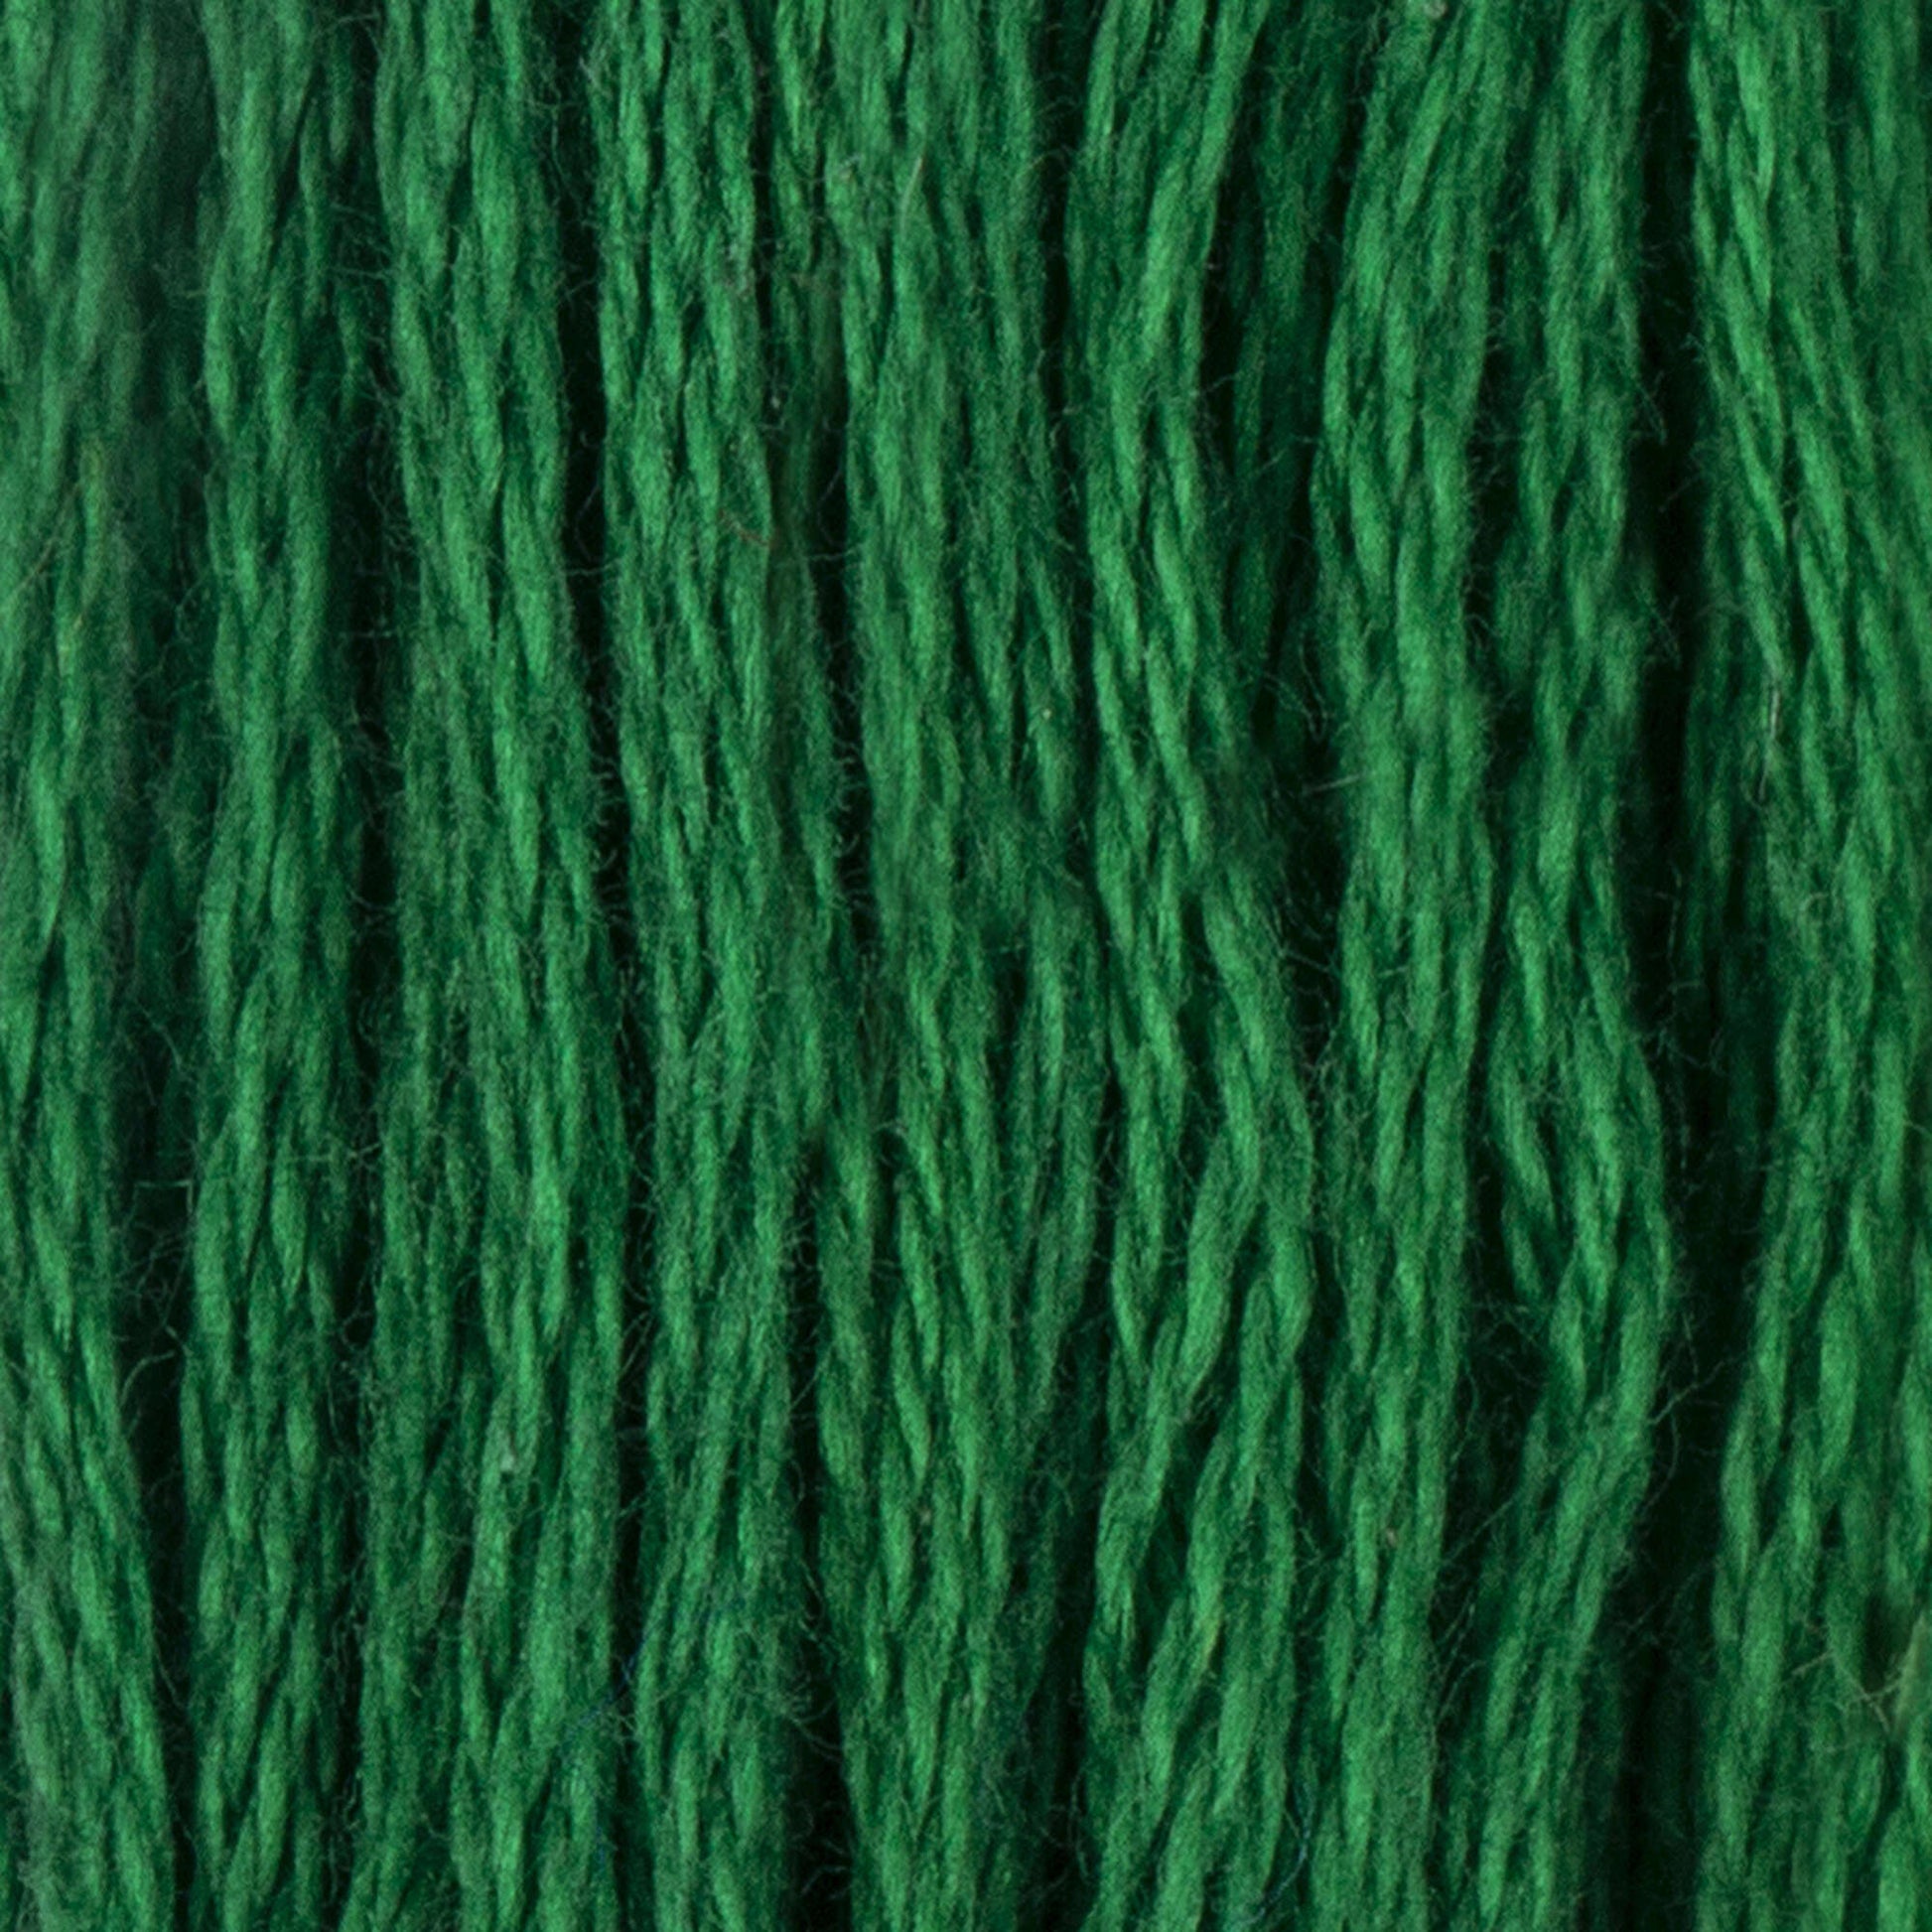 Coats & Clark Cotton Embroidery Floss Christmas Green